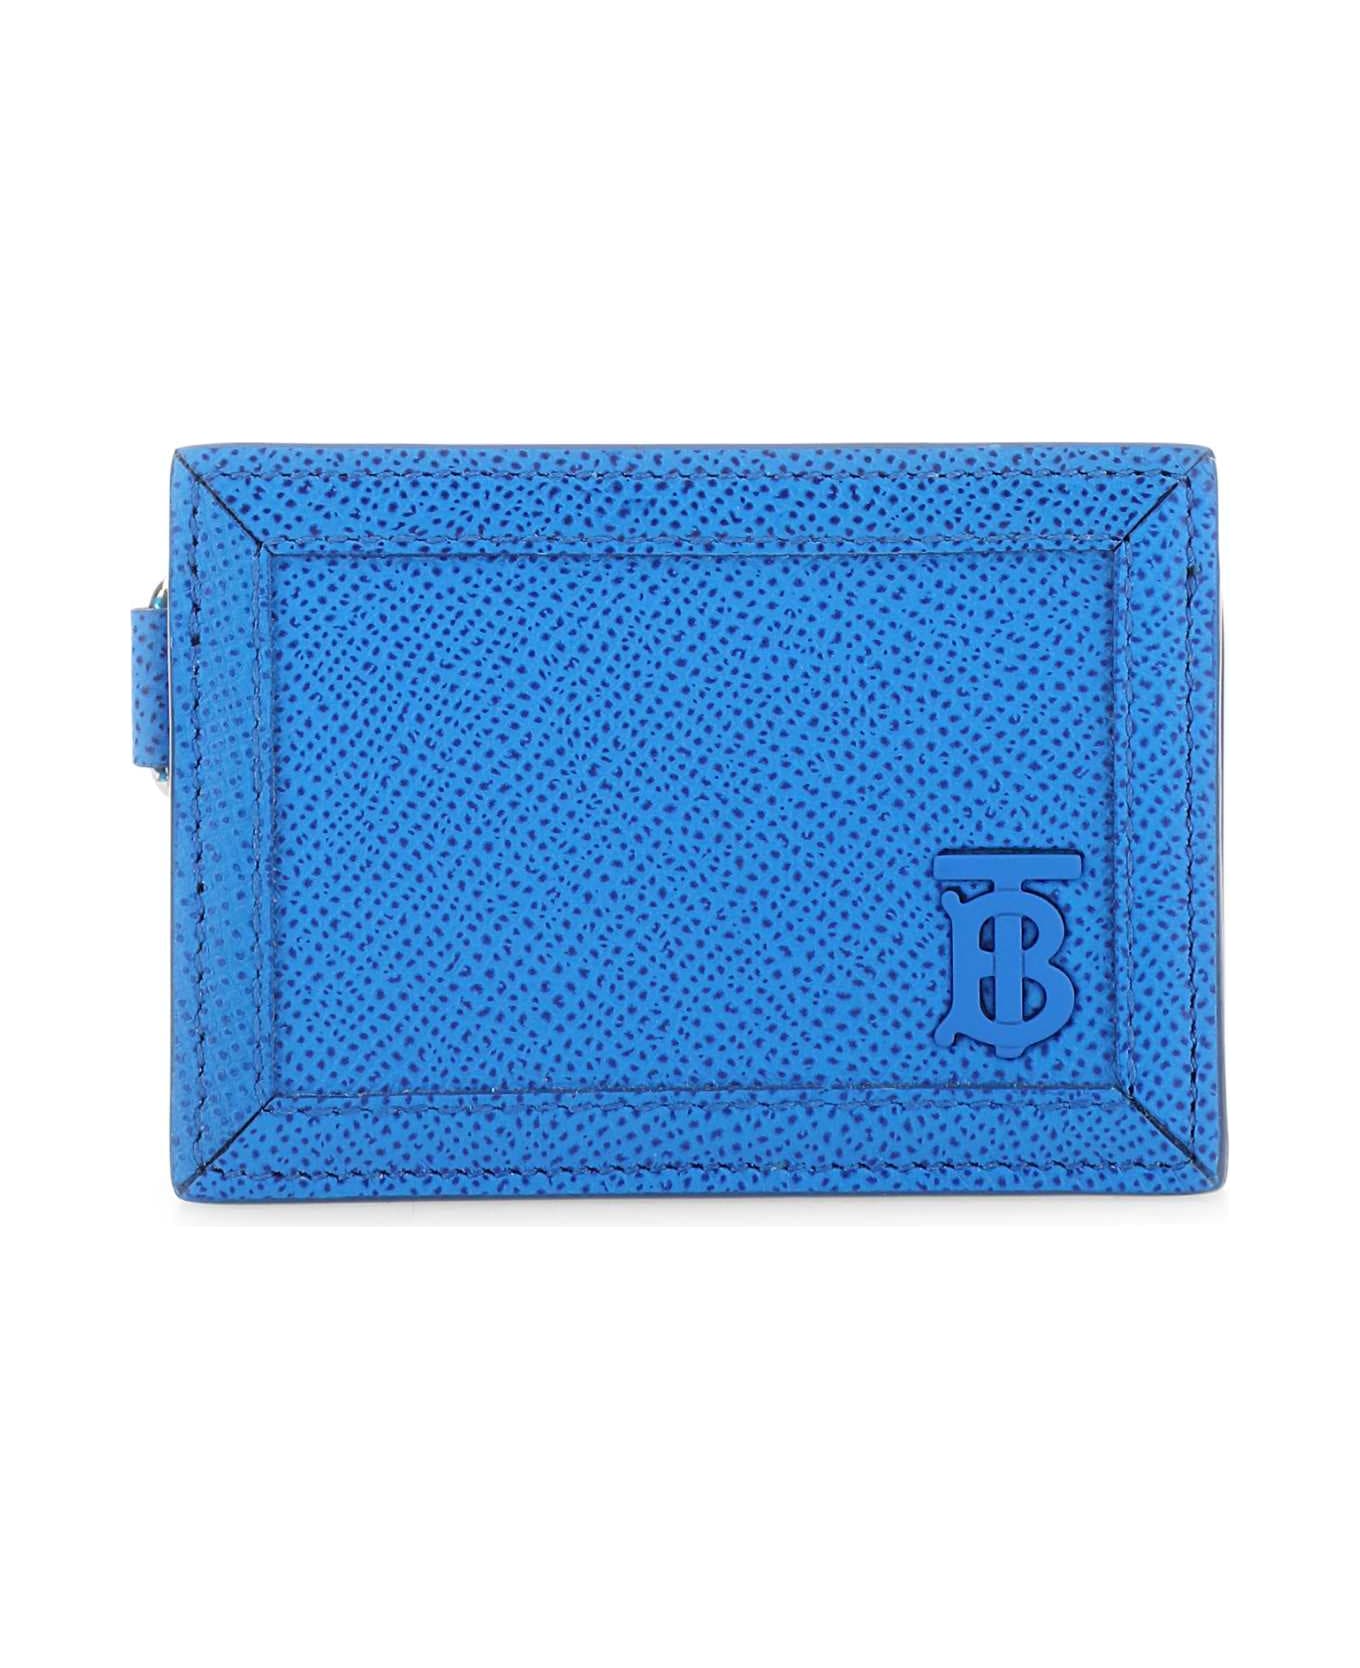 Burberry Turquoise Leather Card Holder - VIVIDBLUE 財布